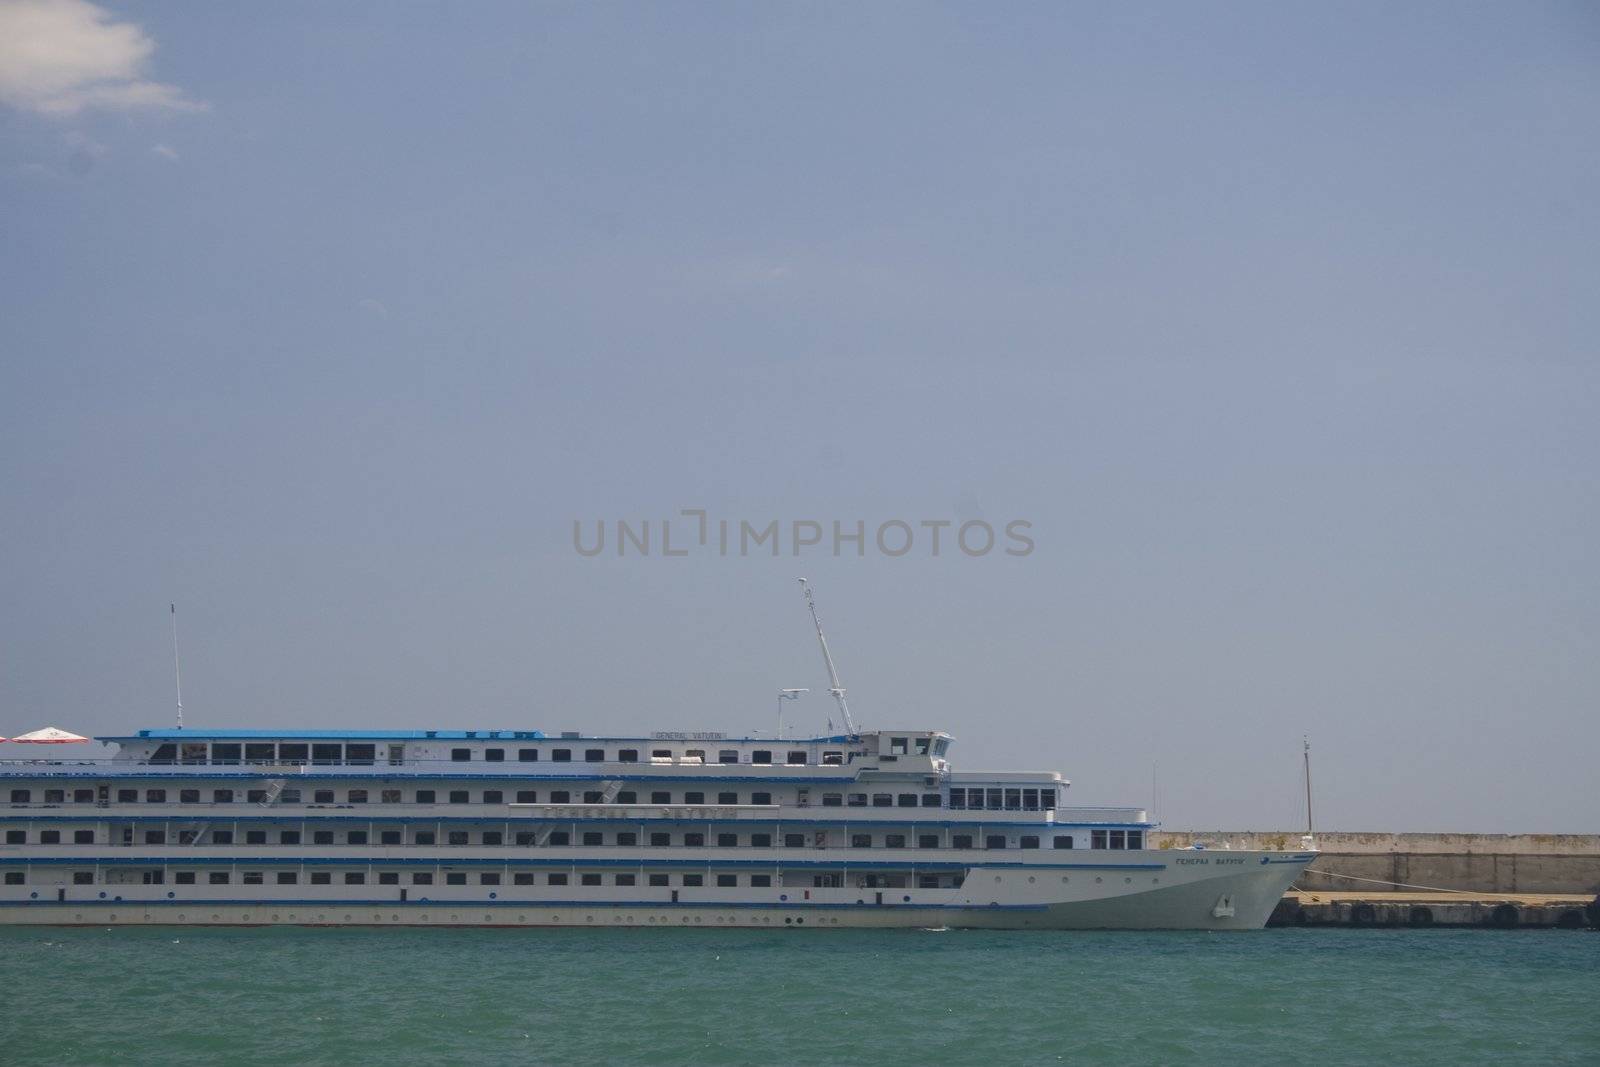 Small cruise ship
Small passenger ship docked in Yalta Ukraine